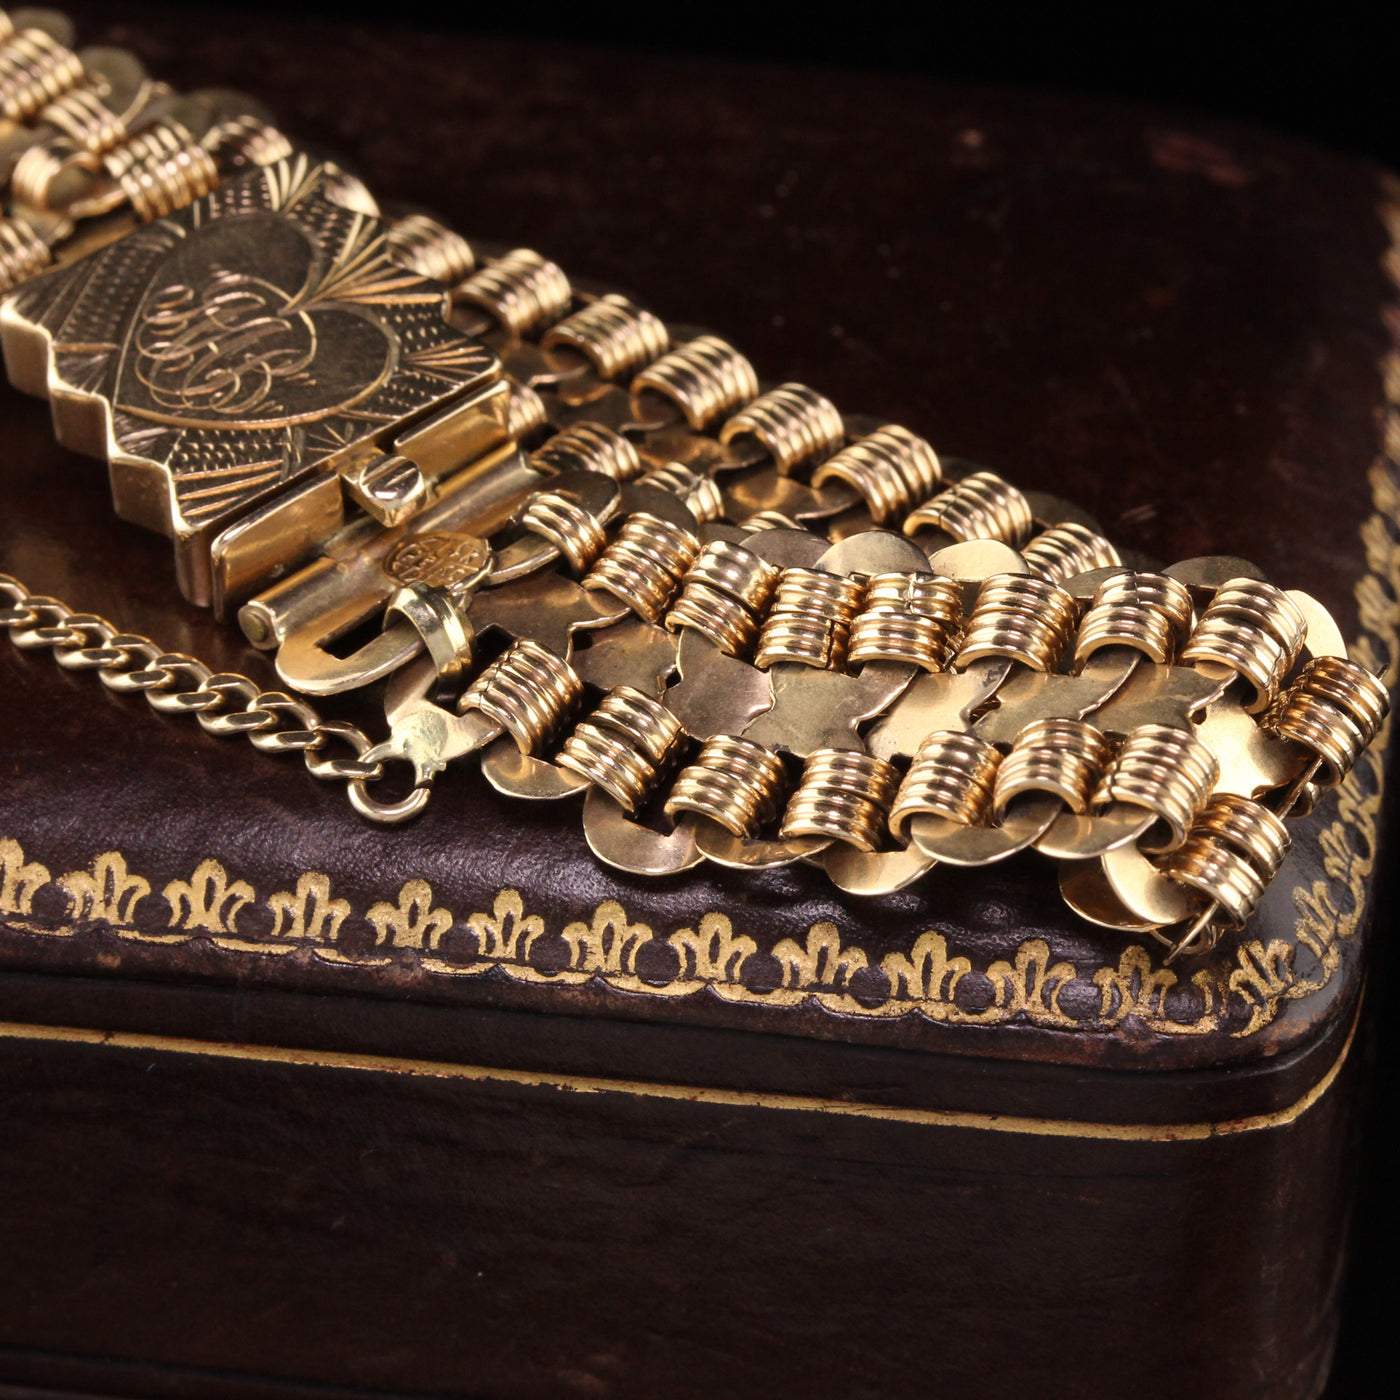 Antique Victorian 14K Yellow Gold Chain Bracelet